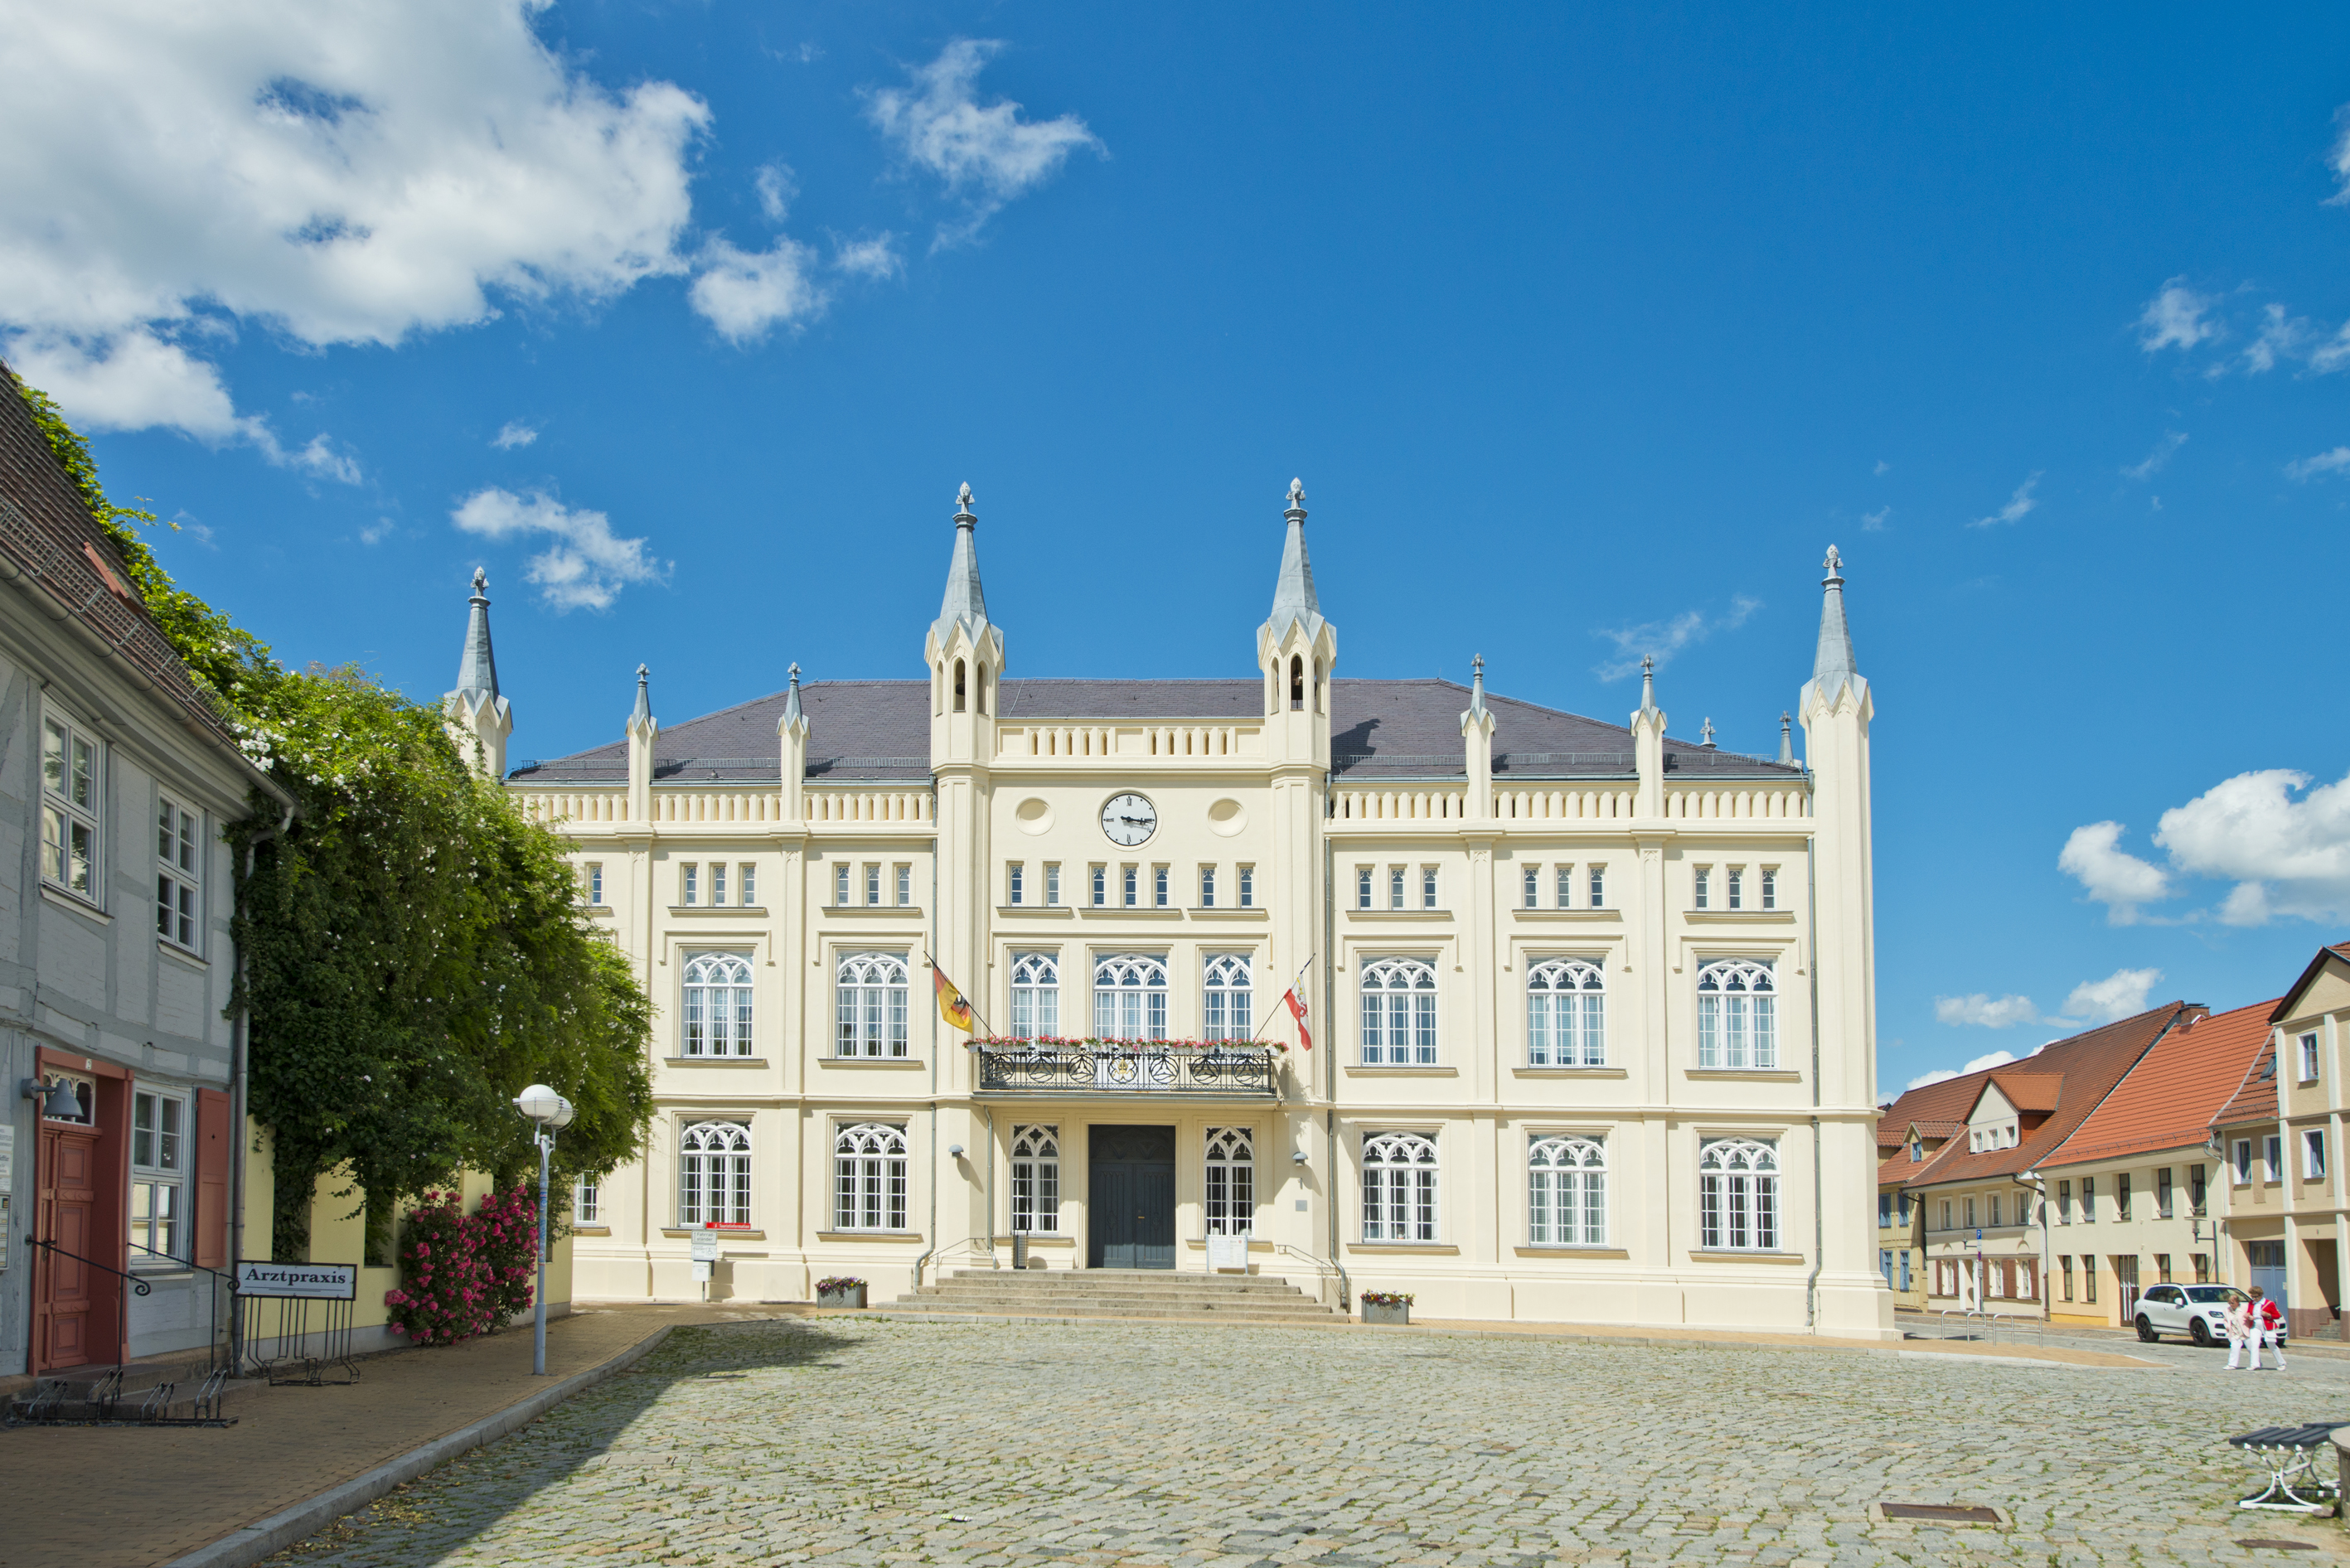 Rathaus frontal